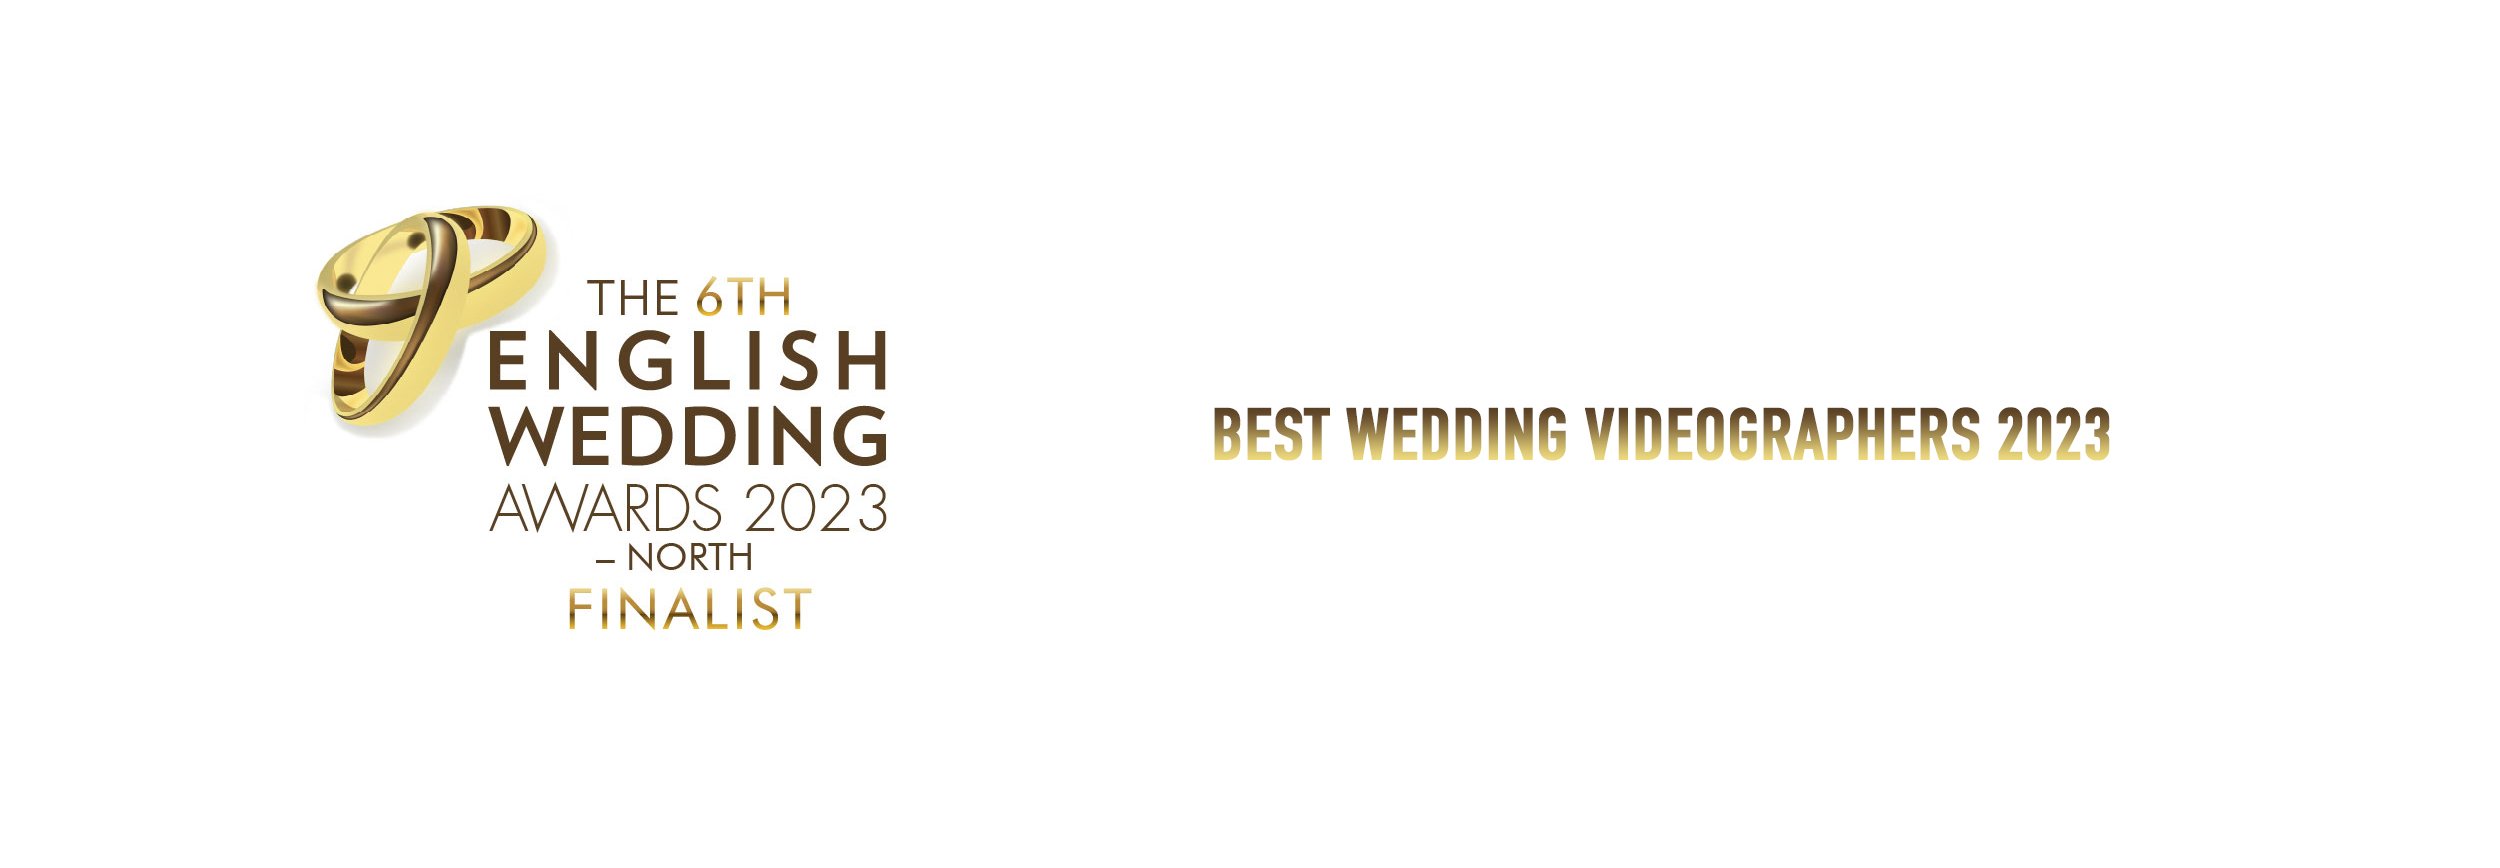 BEST WEDDING VIDEOGRAPHERS 2023.jpeg